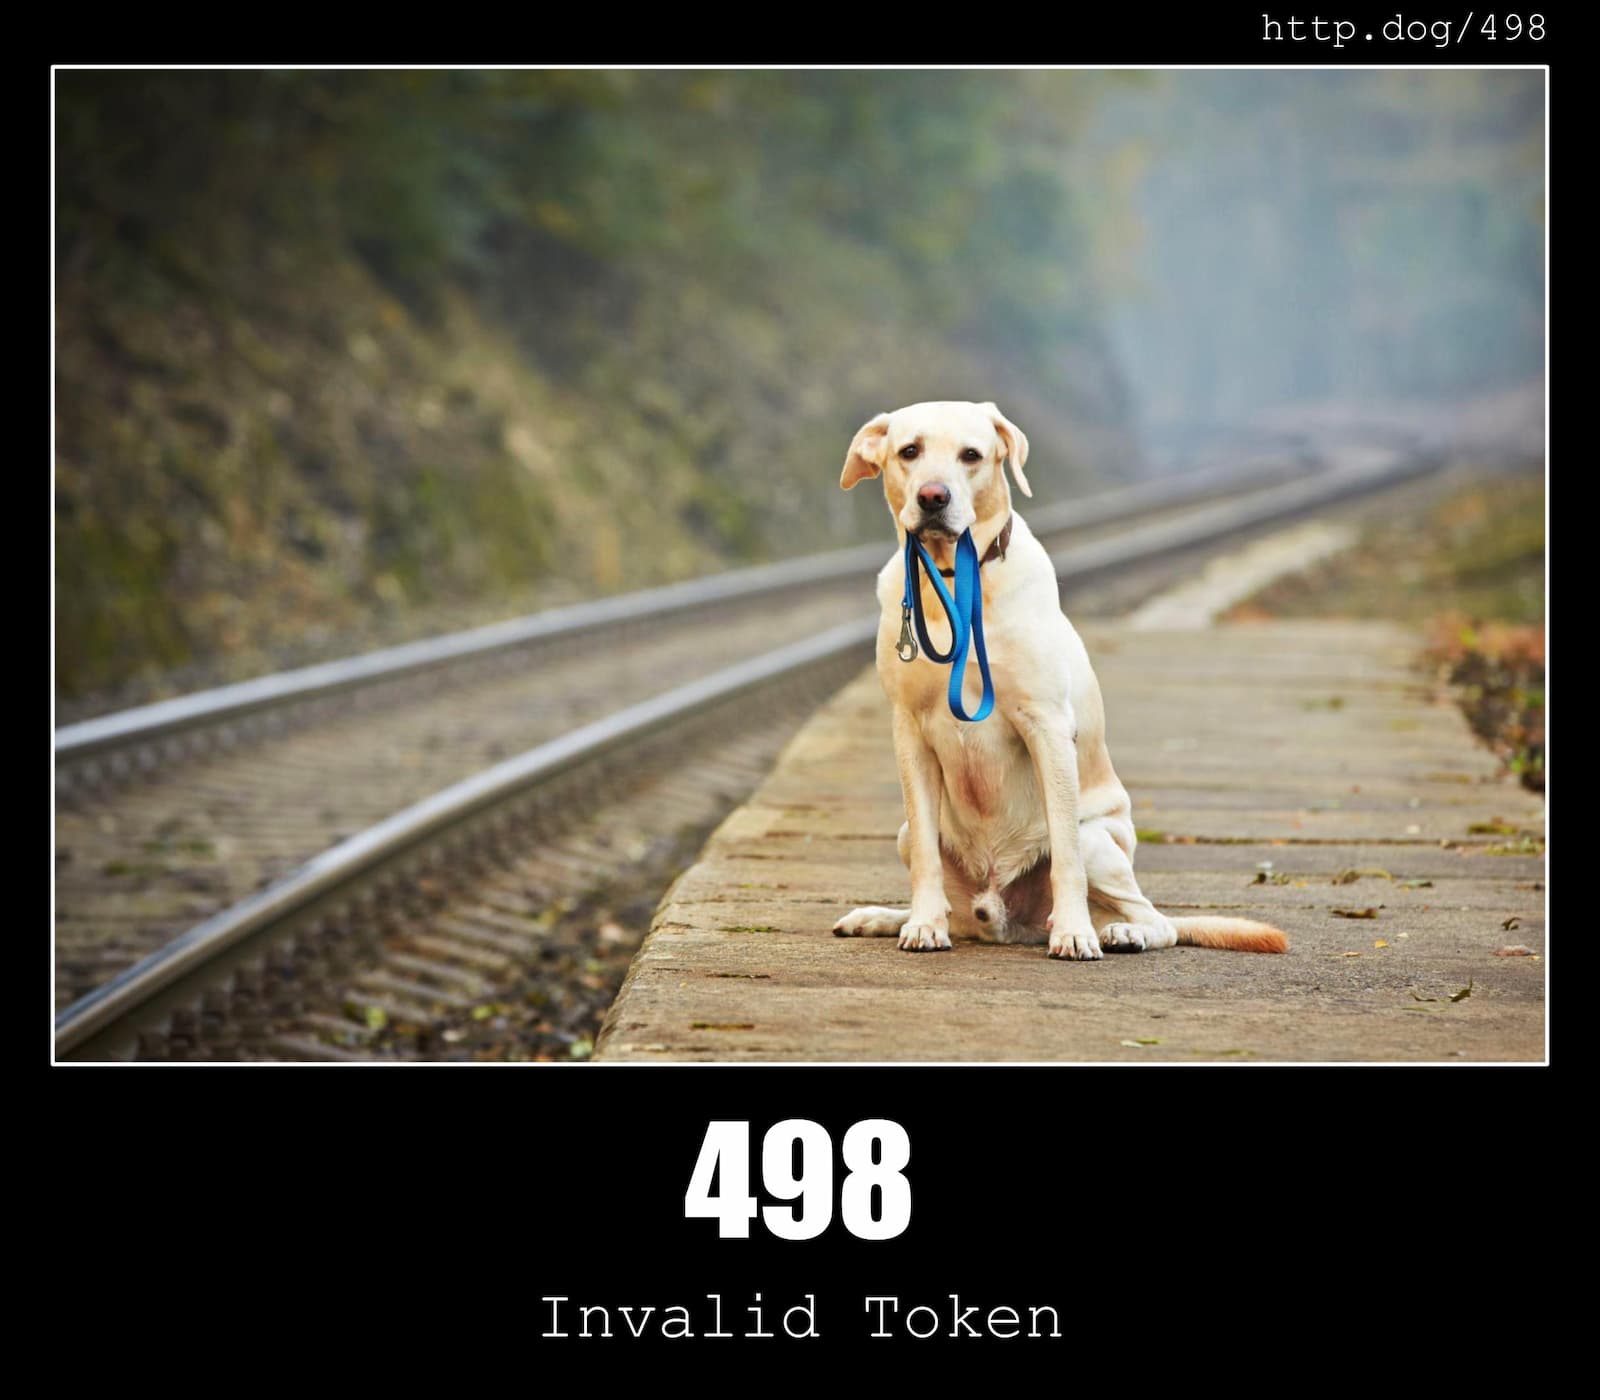 HTTP Status Code 498 Invalid Token & Dogs